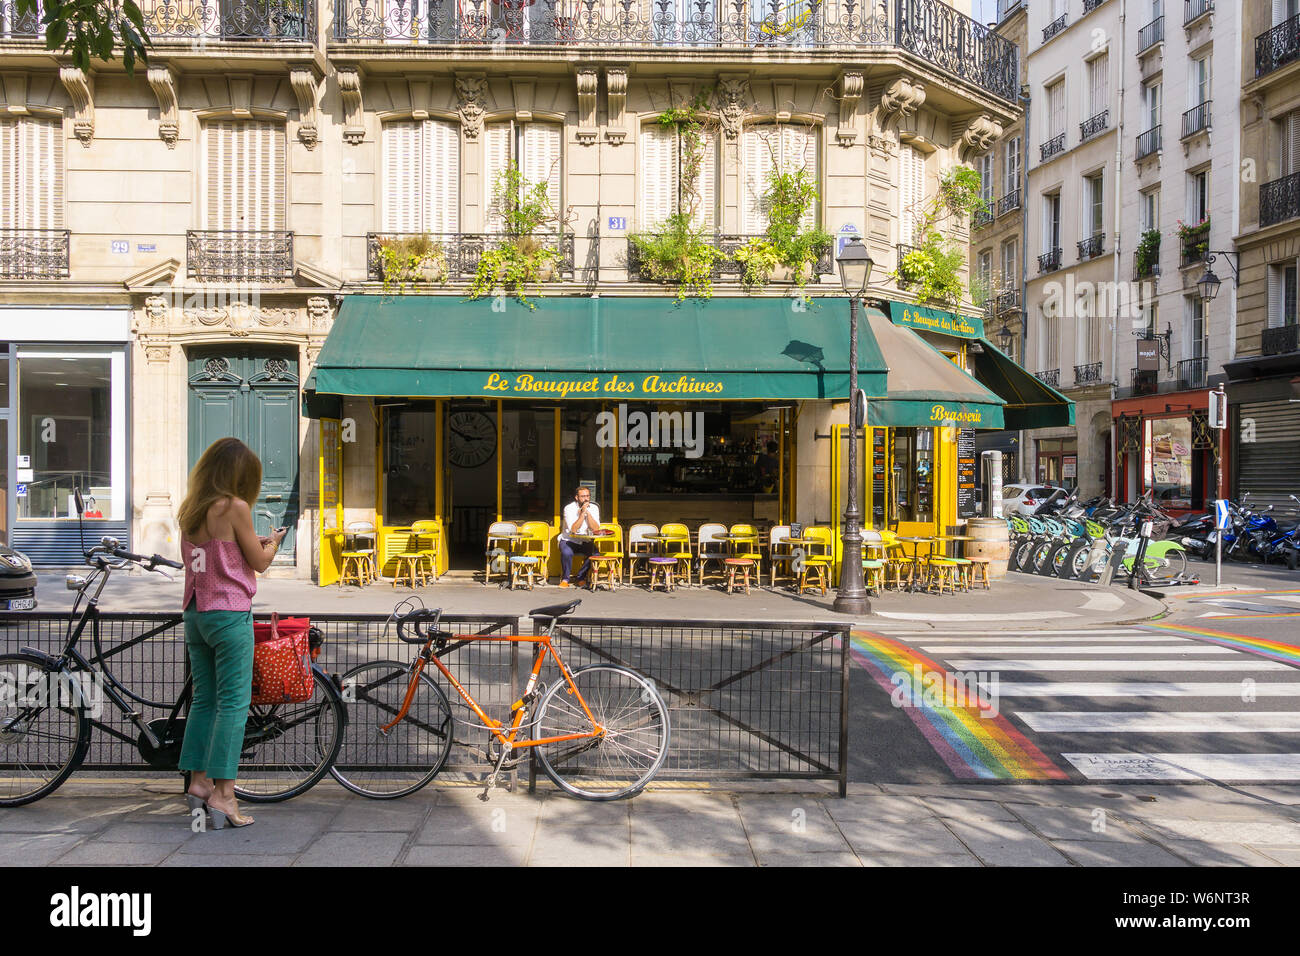 Paris street scene - scene on Rue des Archives in the Marais district, 4th arrondissement of Paris, France, Europe. Stock Photo